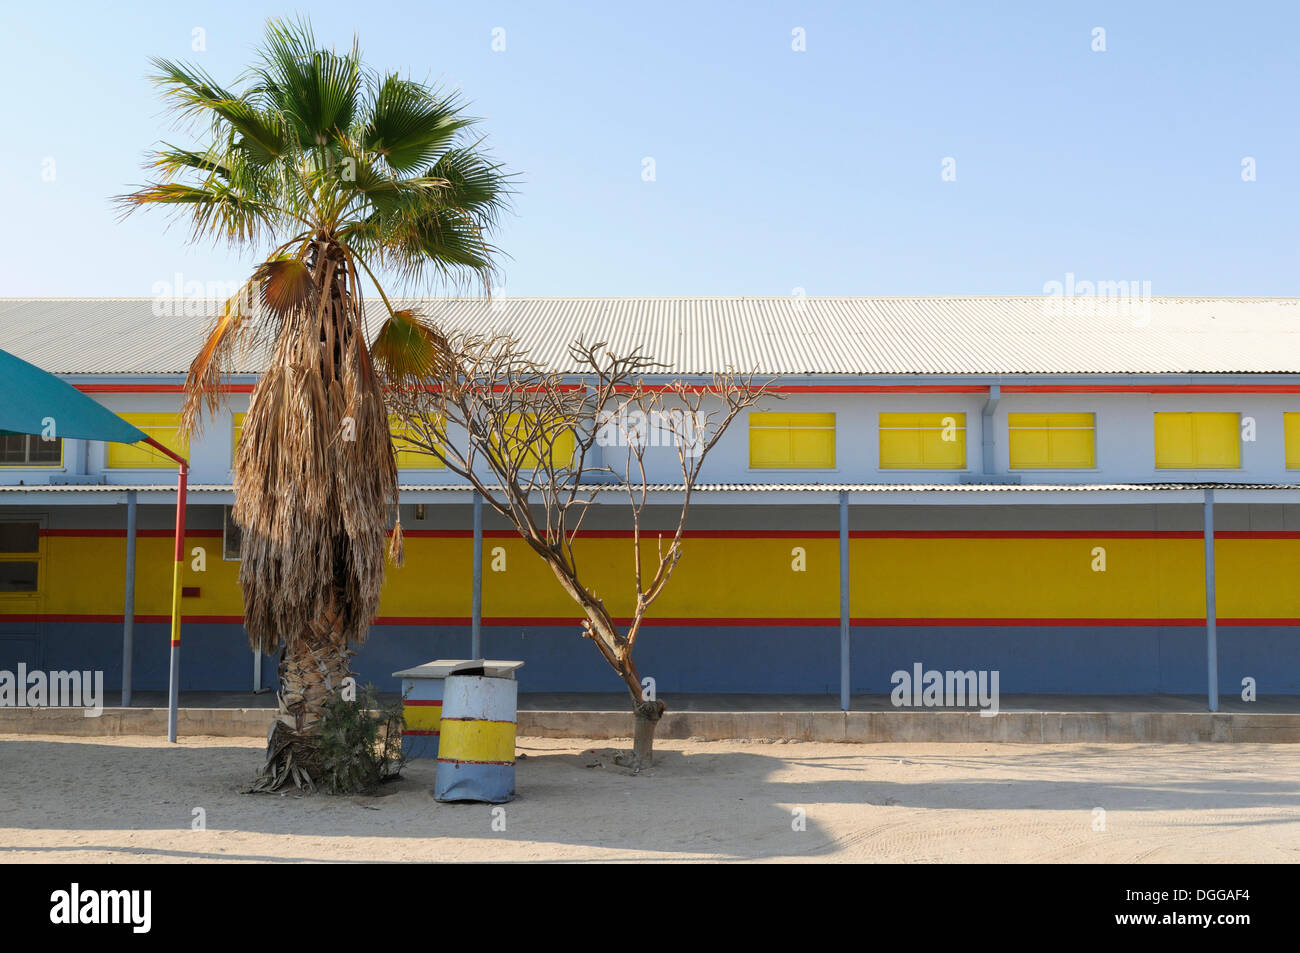 Supermarket, colorful facade, Namibia, Africa Stock Photo